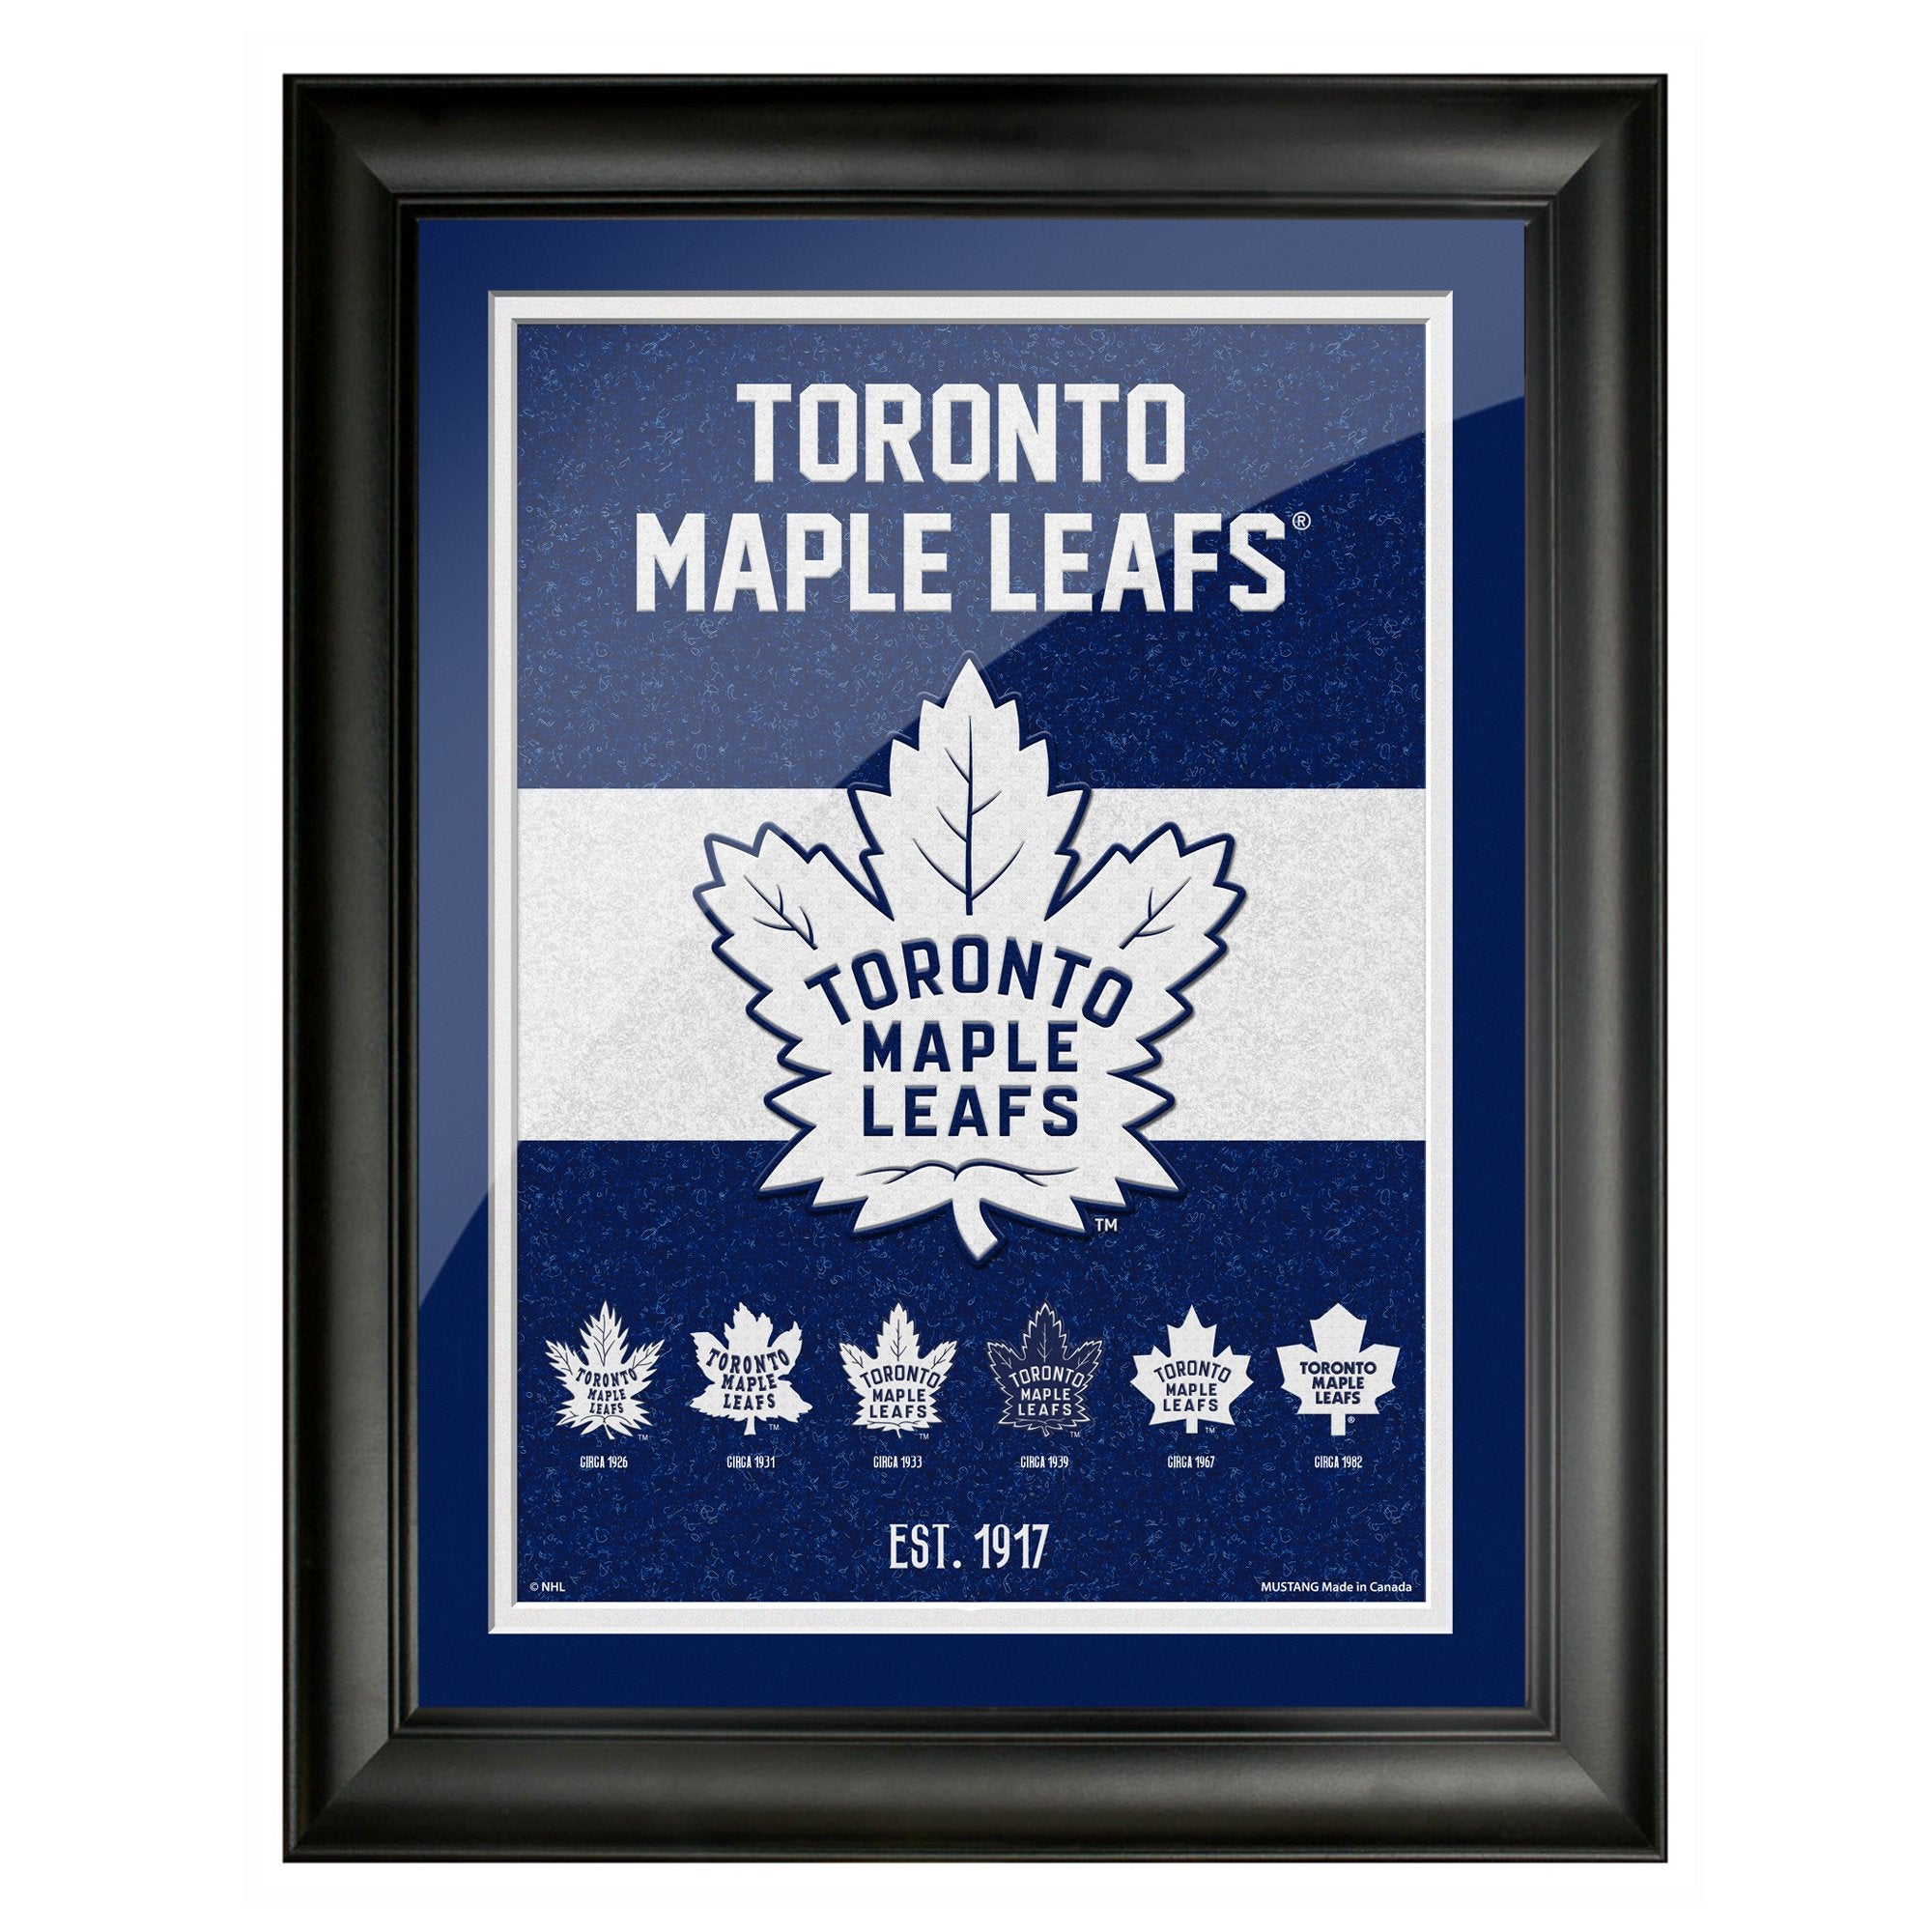 Toronto Maple Leafs 12x16 Team Tradition Framed Artwork